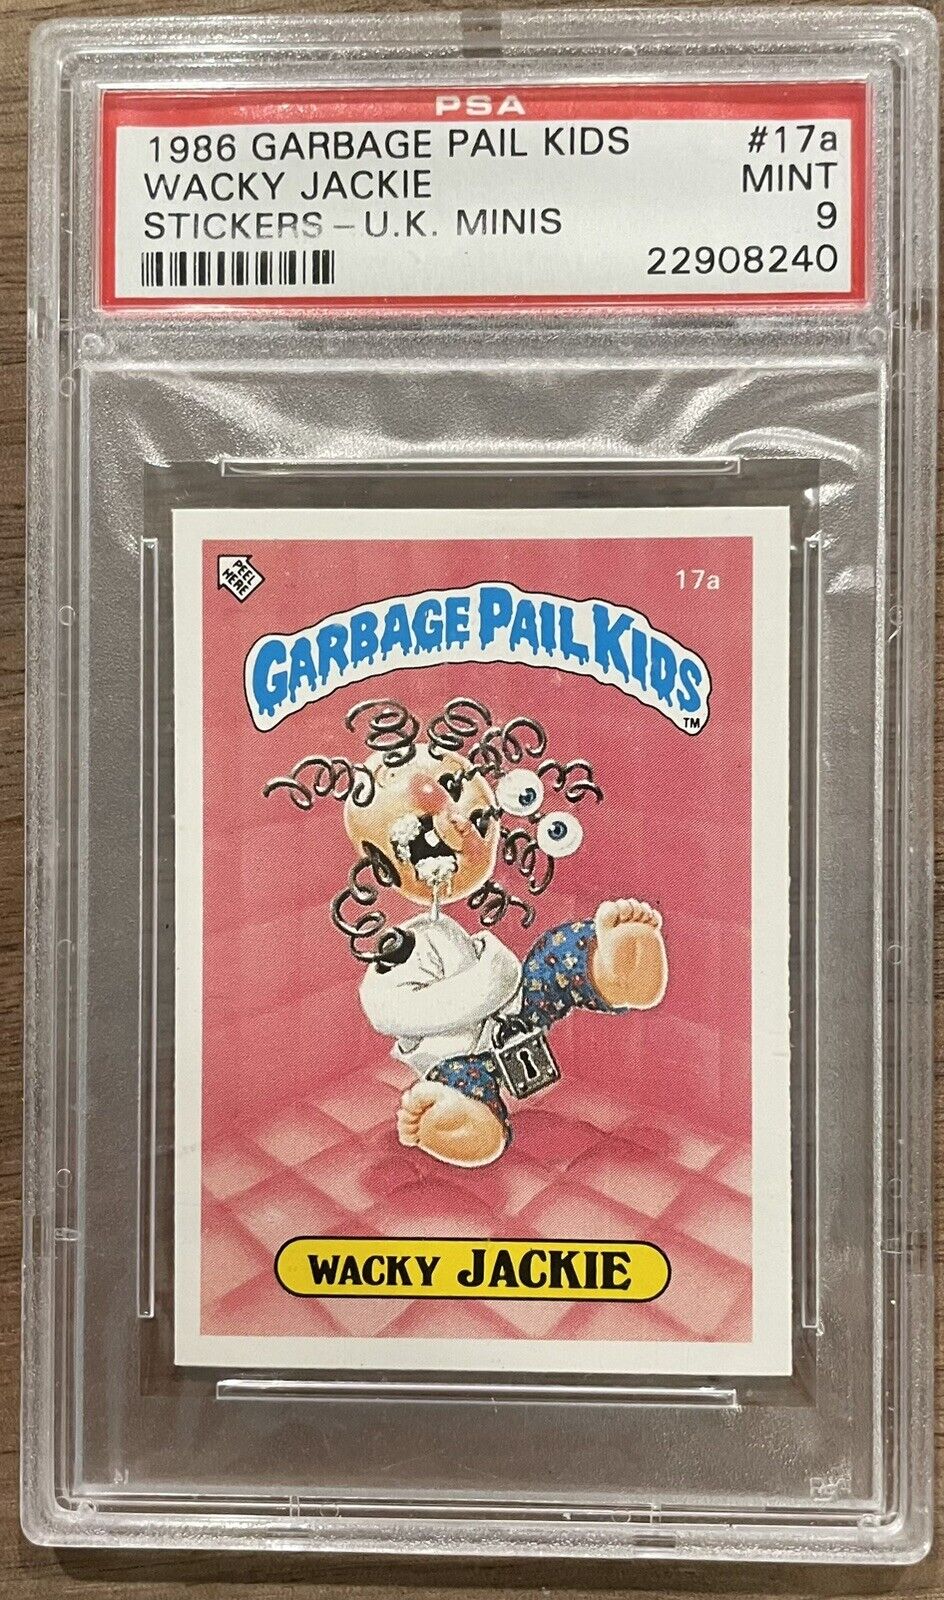 1986 Garbage Pail Kids Stickers   Wacky Jackie  UK Minis #17a  PSA 9  MINT